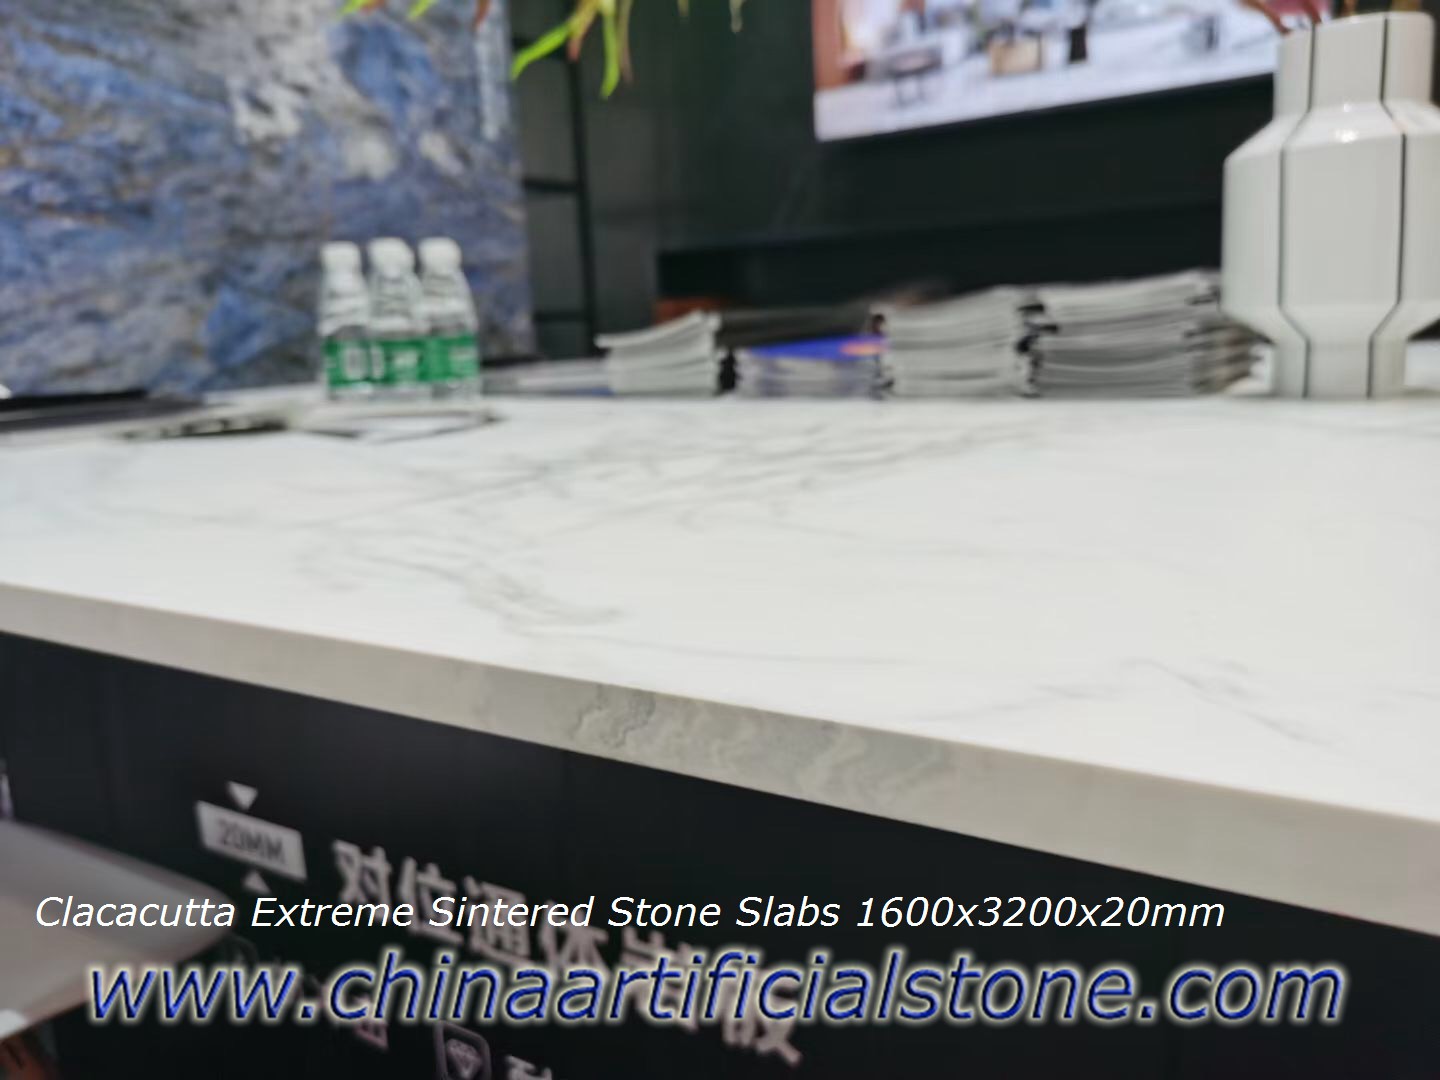 Clacacutta Extreme Sintered Stone Slabs 1600x3200x20mm